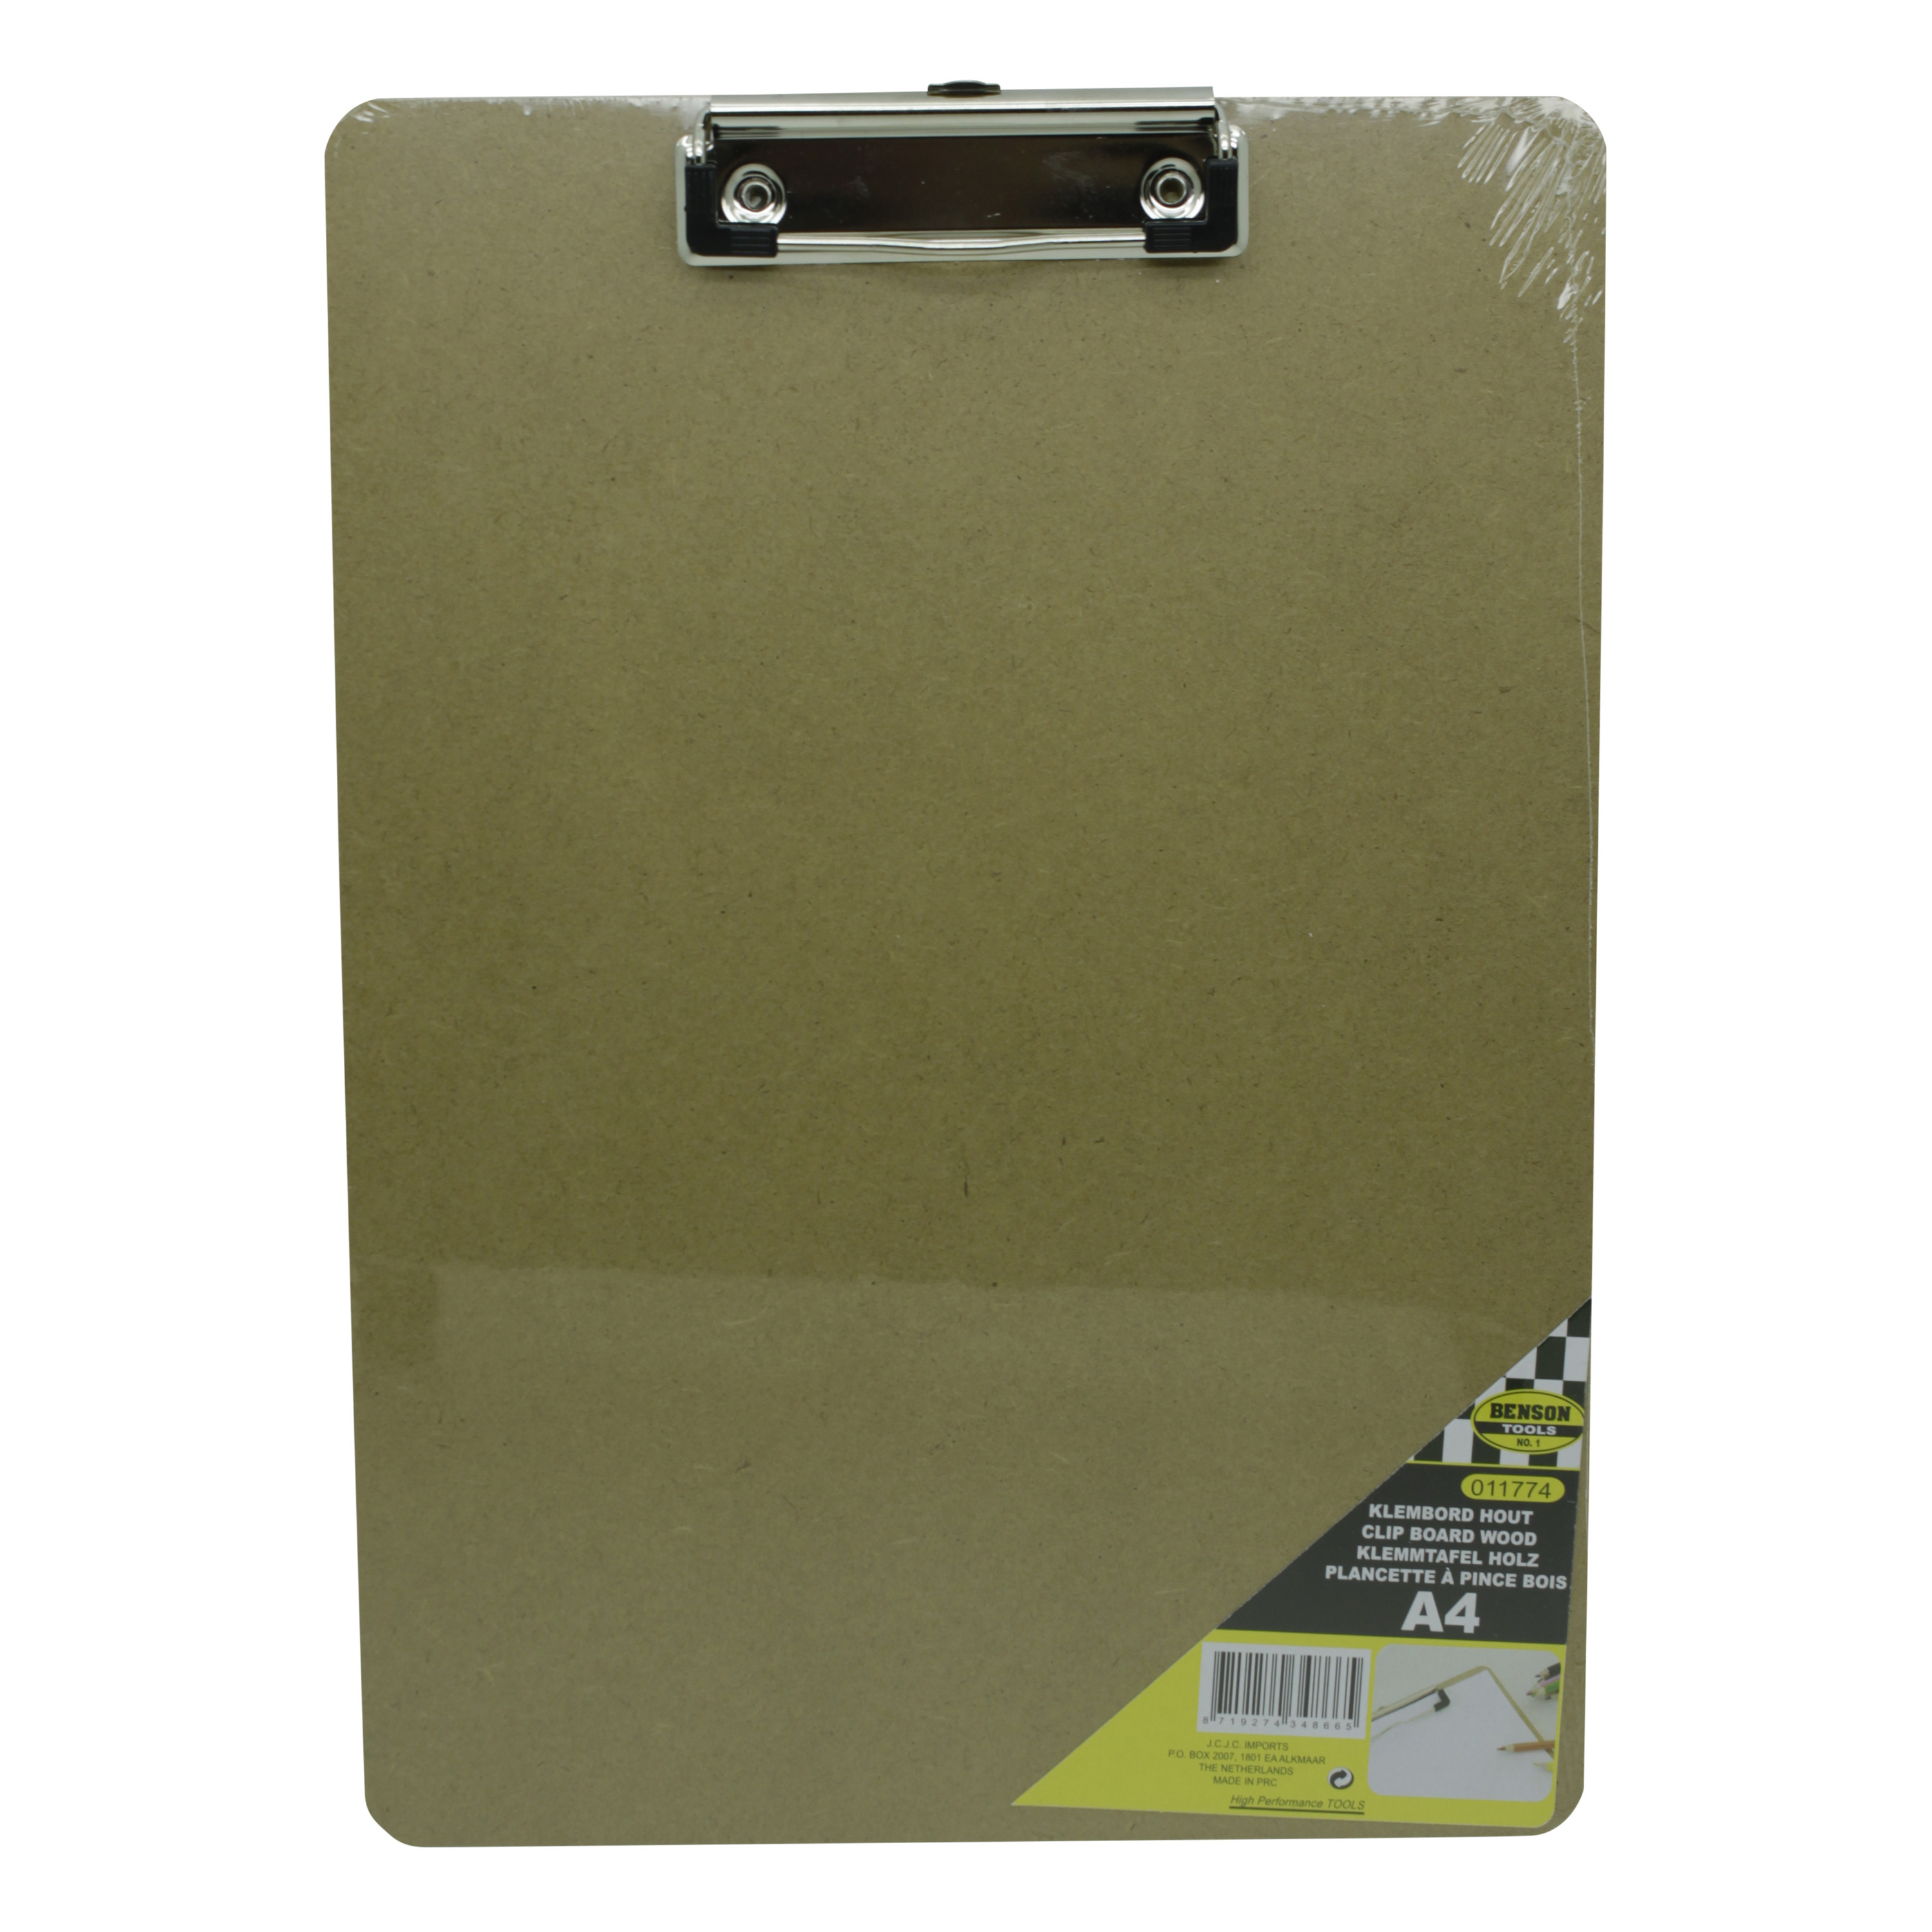 1x Klemborden-clipboards A4 hout met papierklem 23 x 23 cm